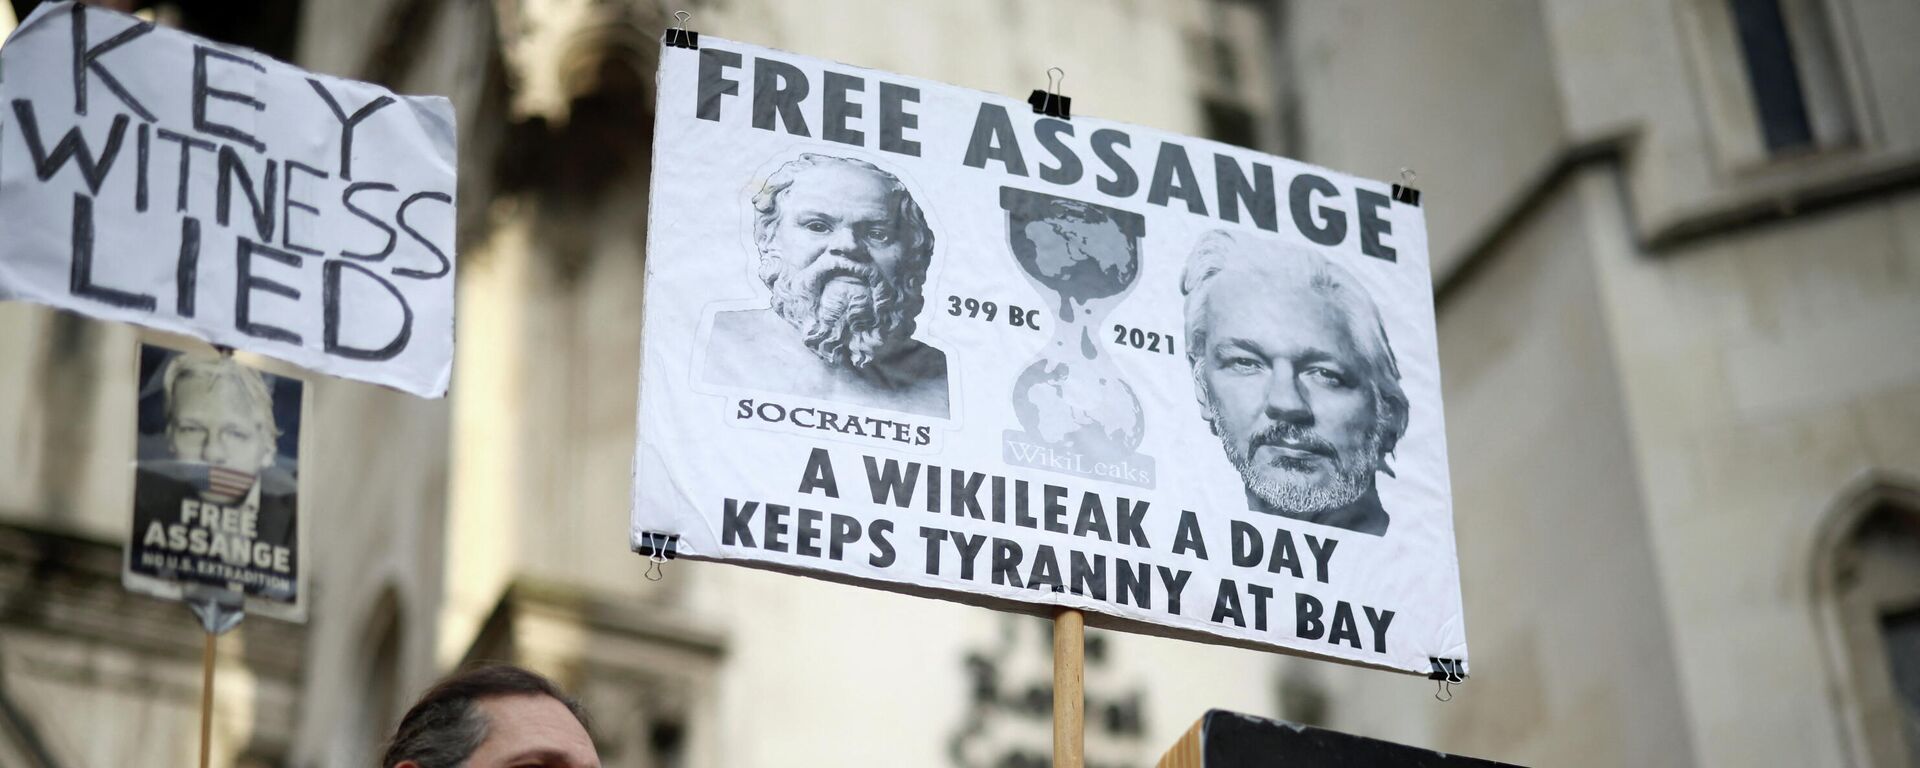 Activistas apoyan a Julian Assange - Sputnik Mundo, 1920, 11.12.2021